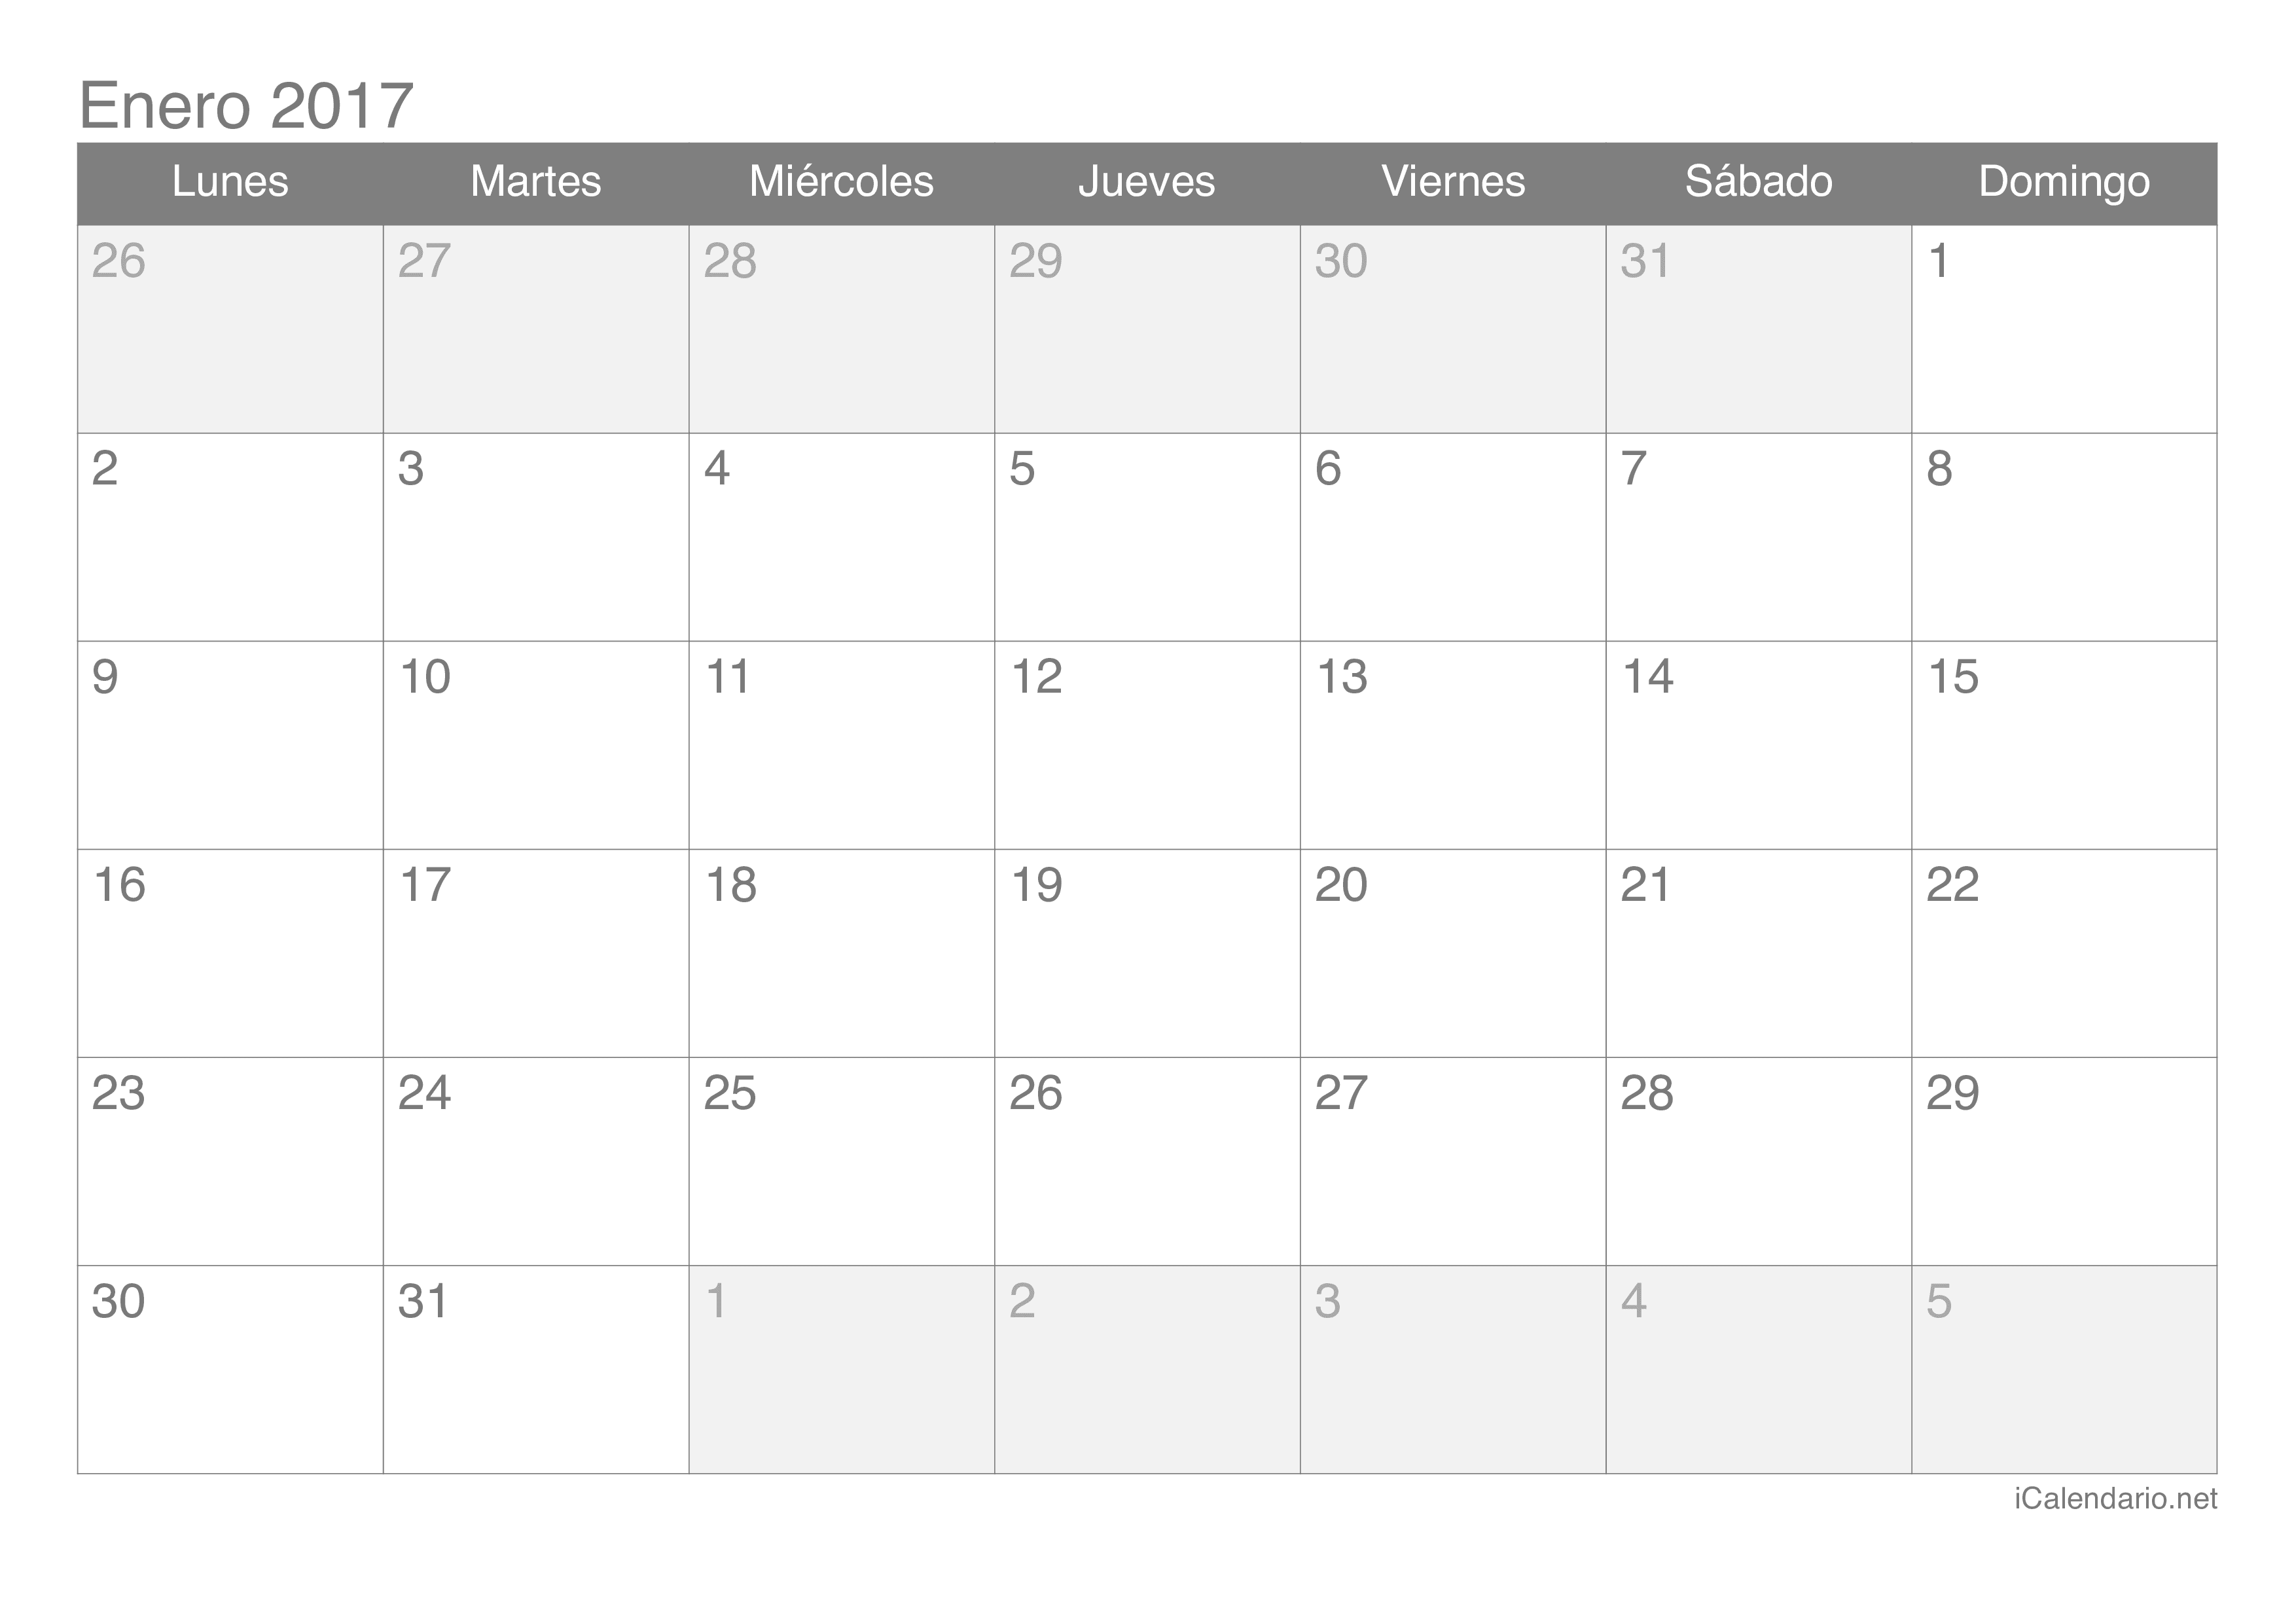 Calendario enero 2017 para imprimir - iCalendario.net